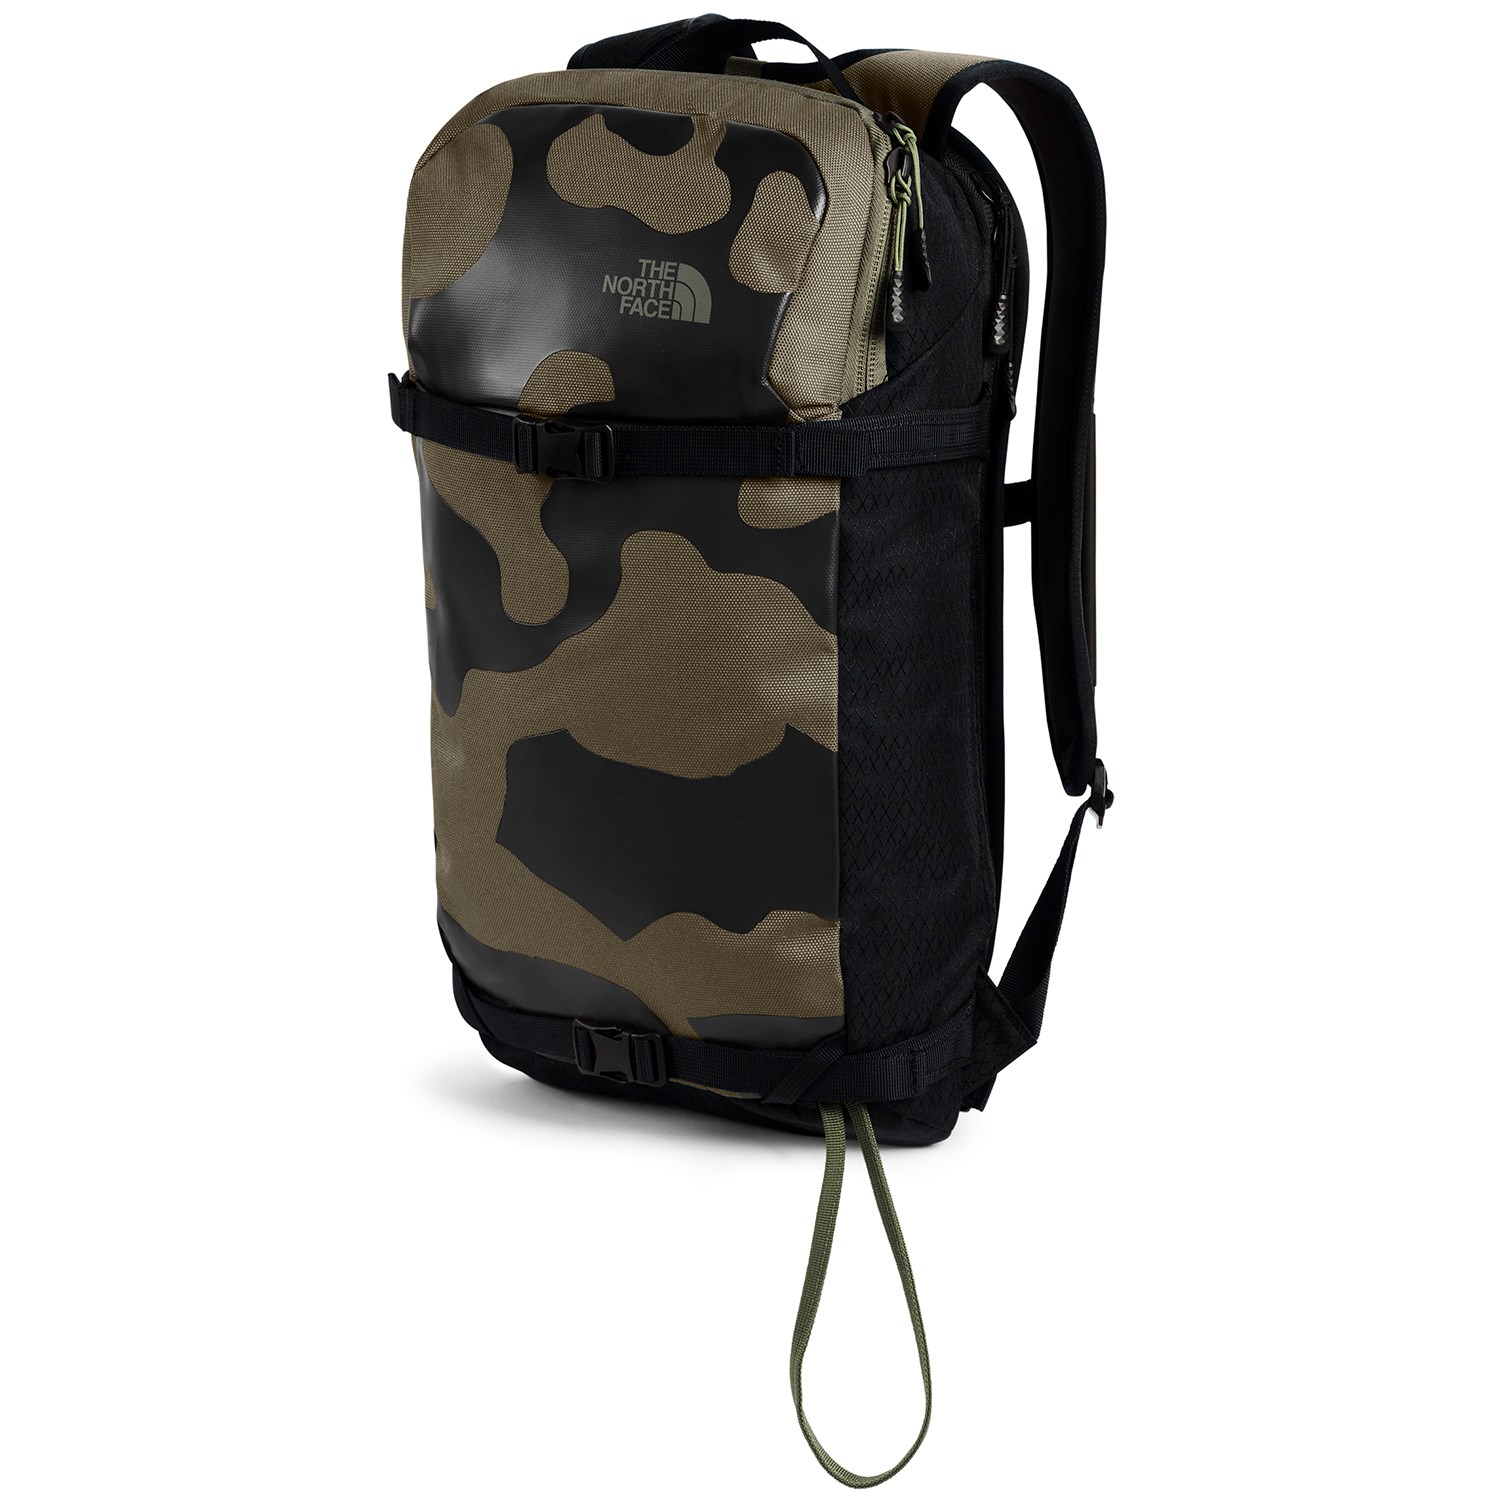 The North Face Slackpack 20L Backpack | evo